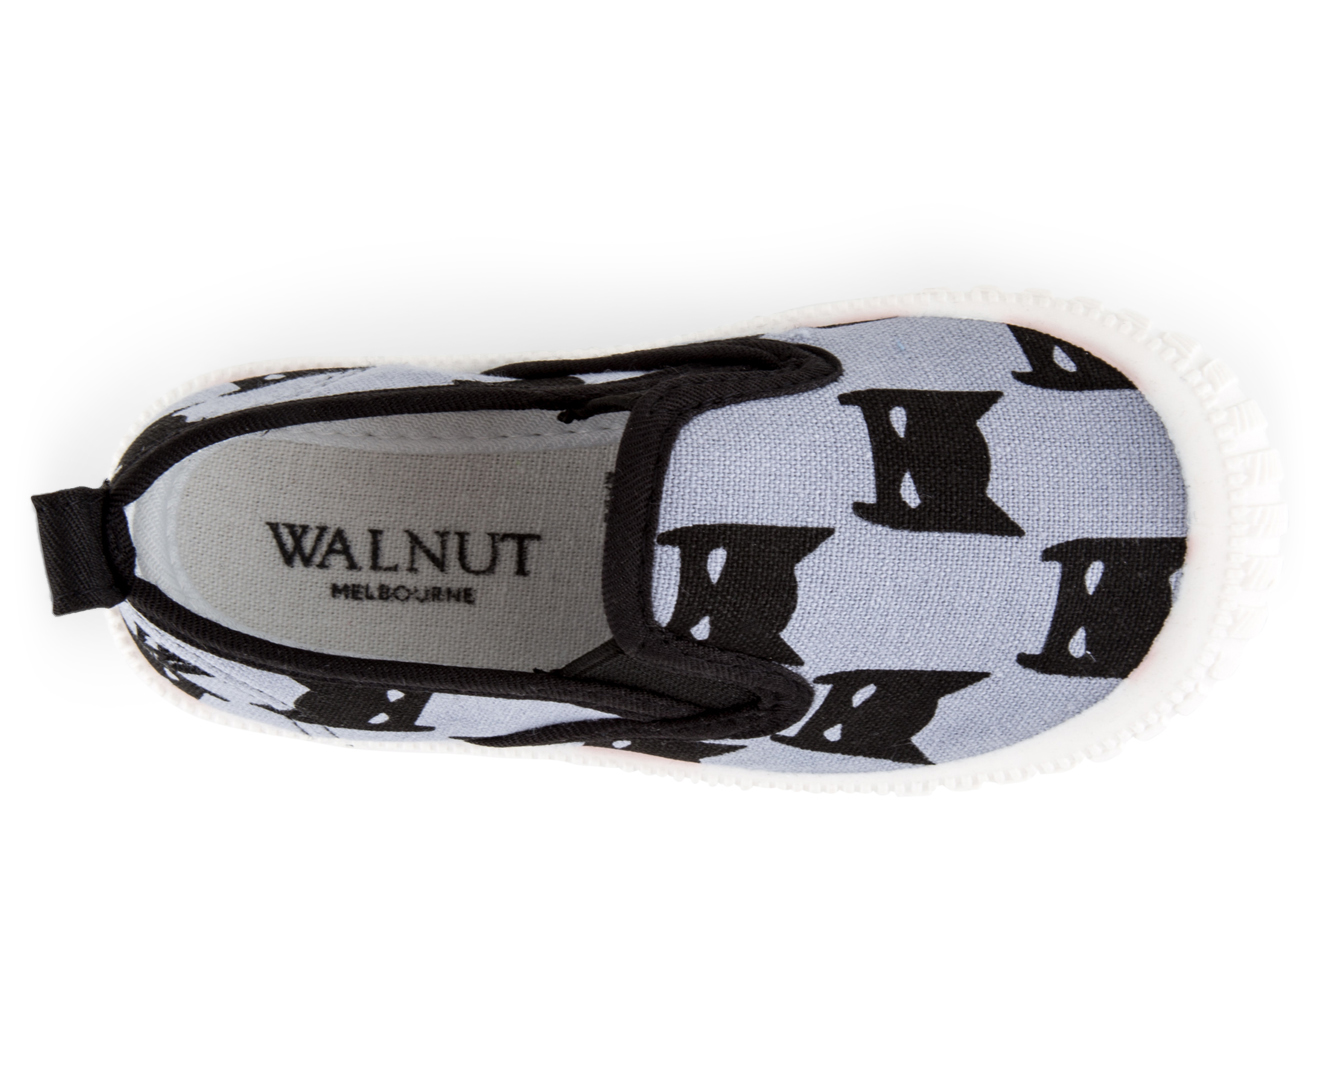 Walnut Melbourne Kids' Charlie Cruise Shoe - Bat Mask